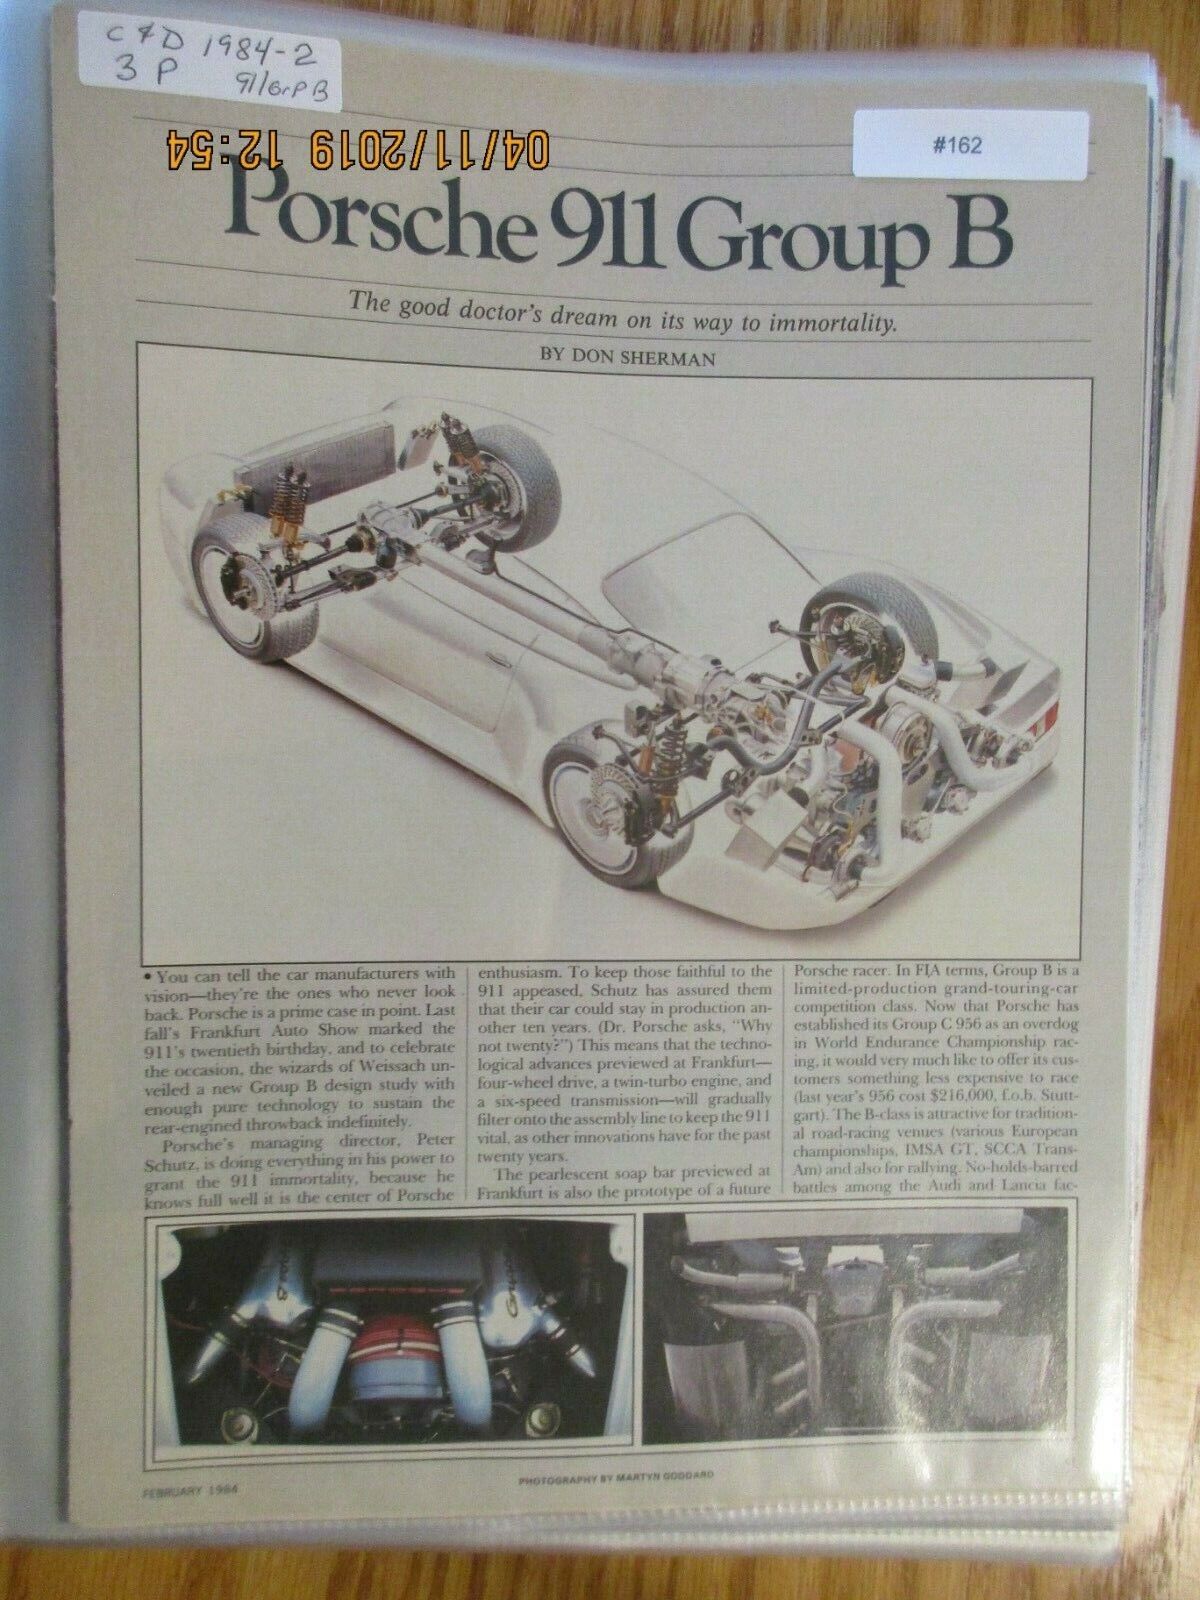 #162 Porsche Article or Road Test 1984 Porsche 911 Group B, 4 page Road Test